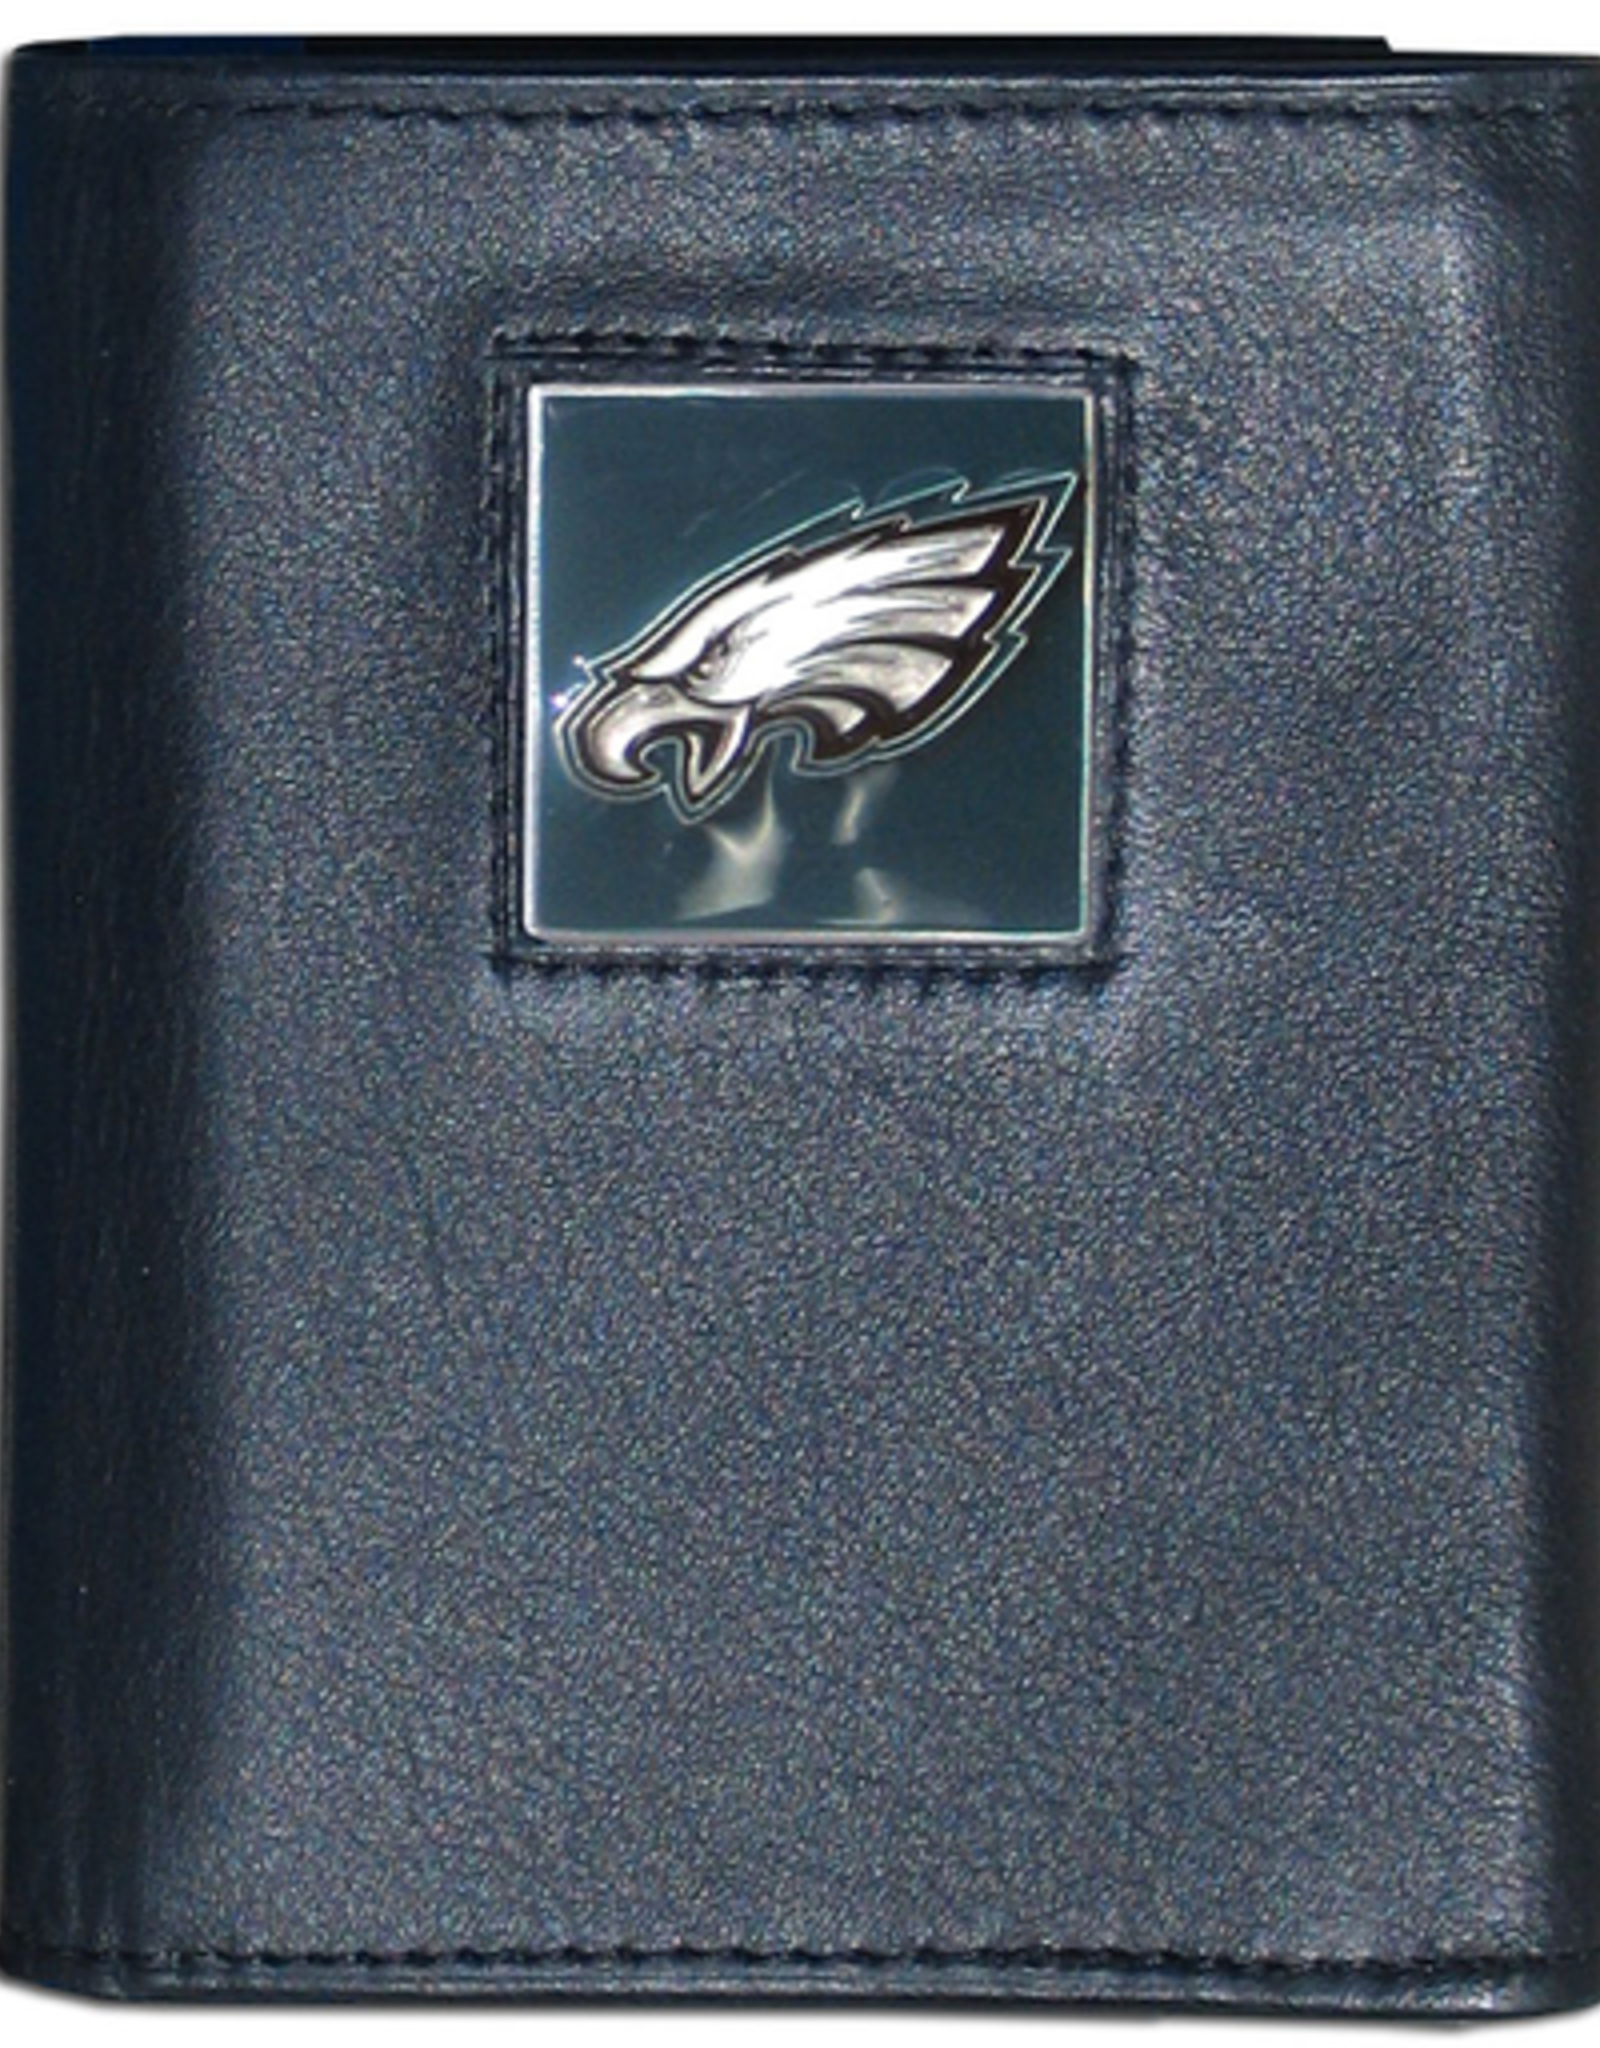 SISKIYOU GIFTS Philadelphia Eagles Executive Leather Trifold Wallet